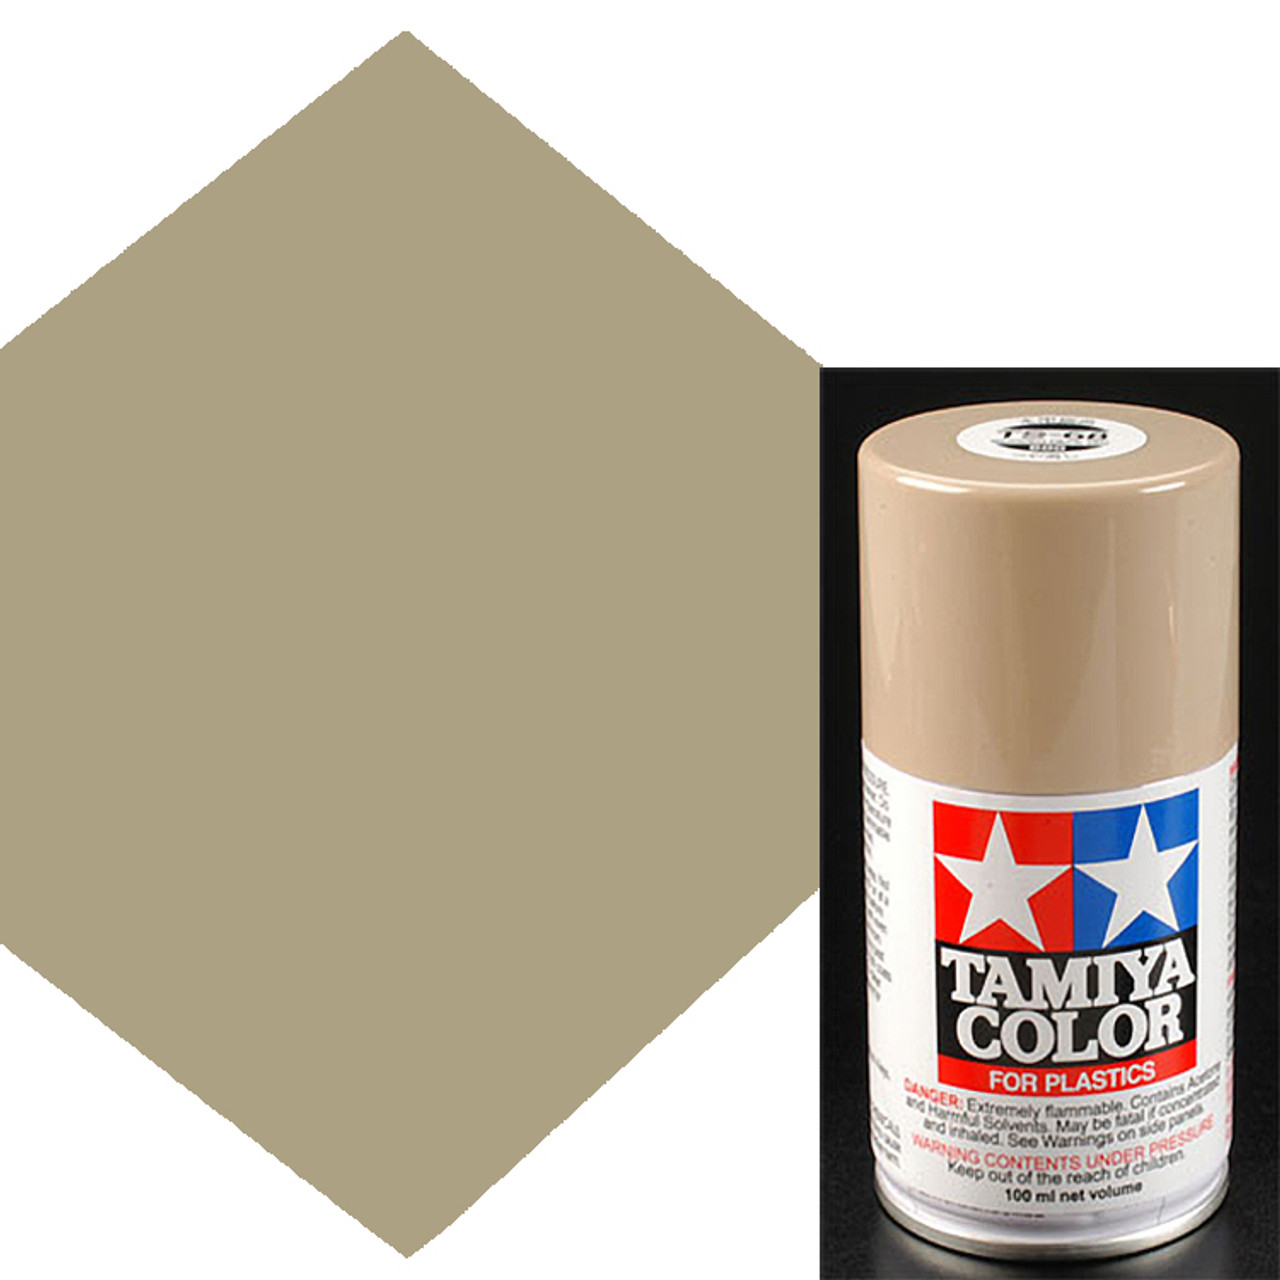 Tamiya TS-68 Wooden Deck Tan Lacquer Spray Paint 3 oz - Nitro Hobbies